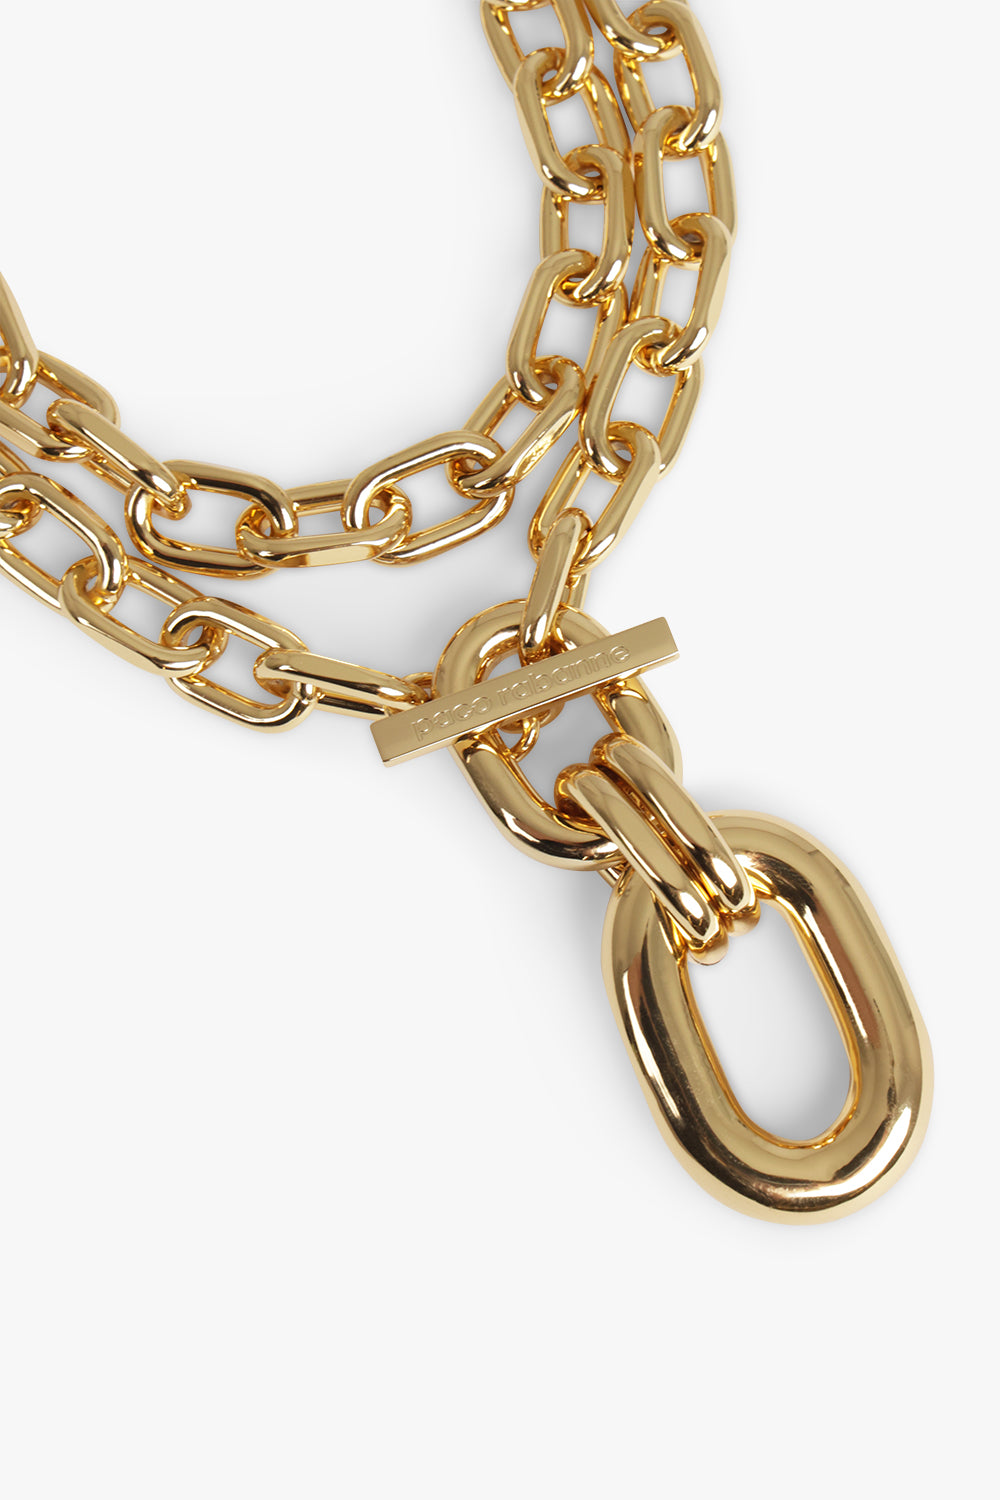 RABANNE JEWELLERY GOLD XL LINK ADJUSTABLE PENDANT  | GOLD